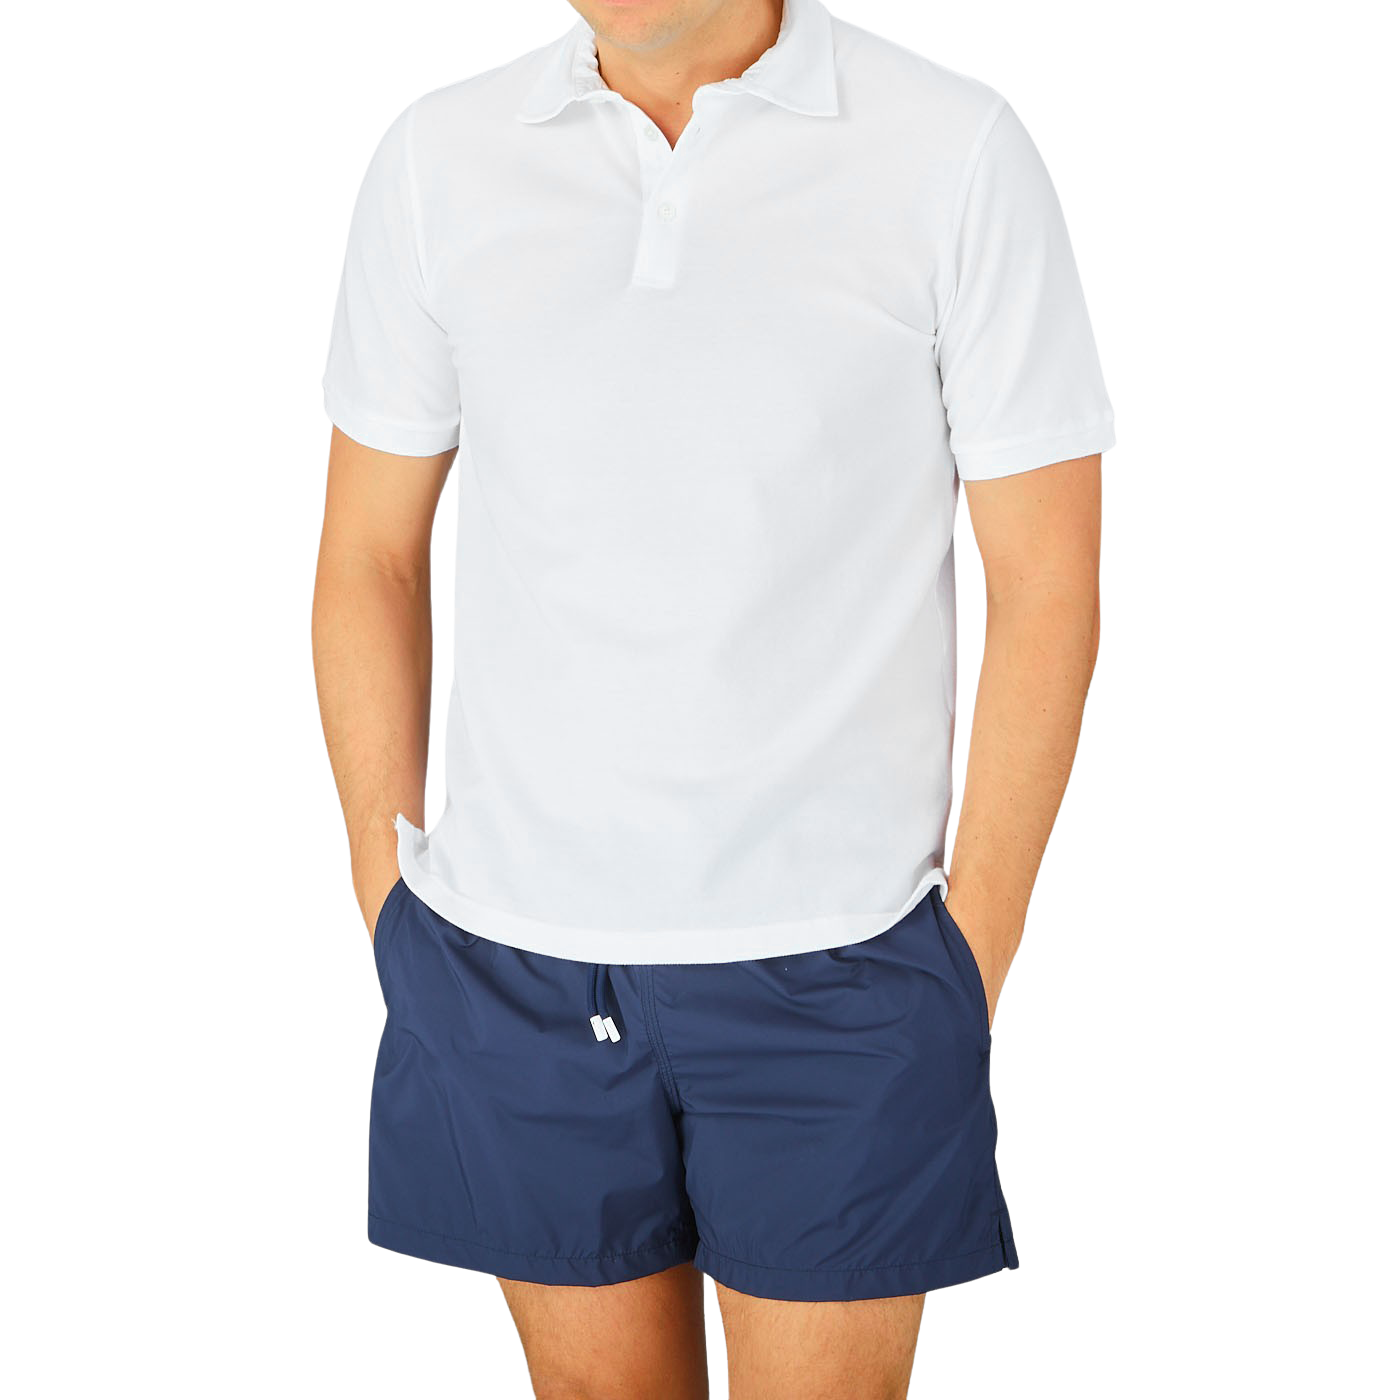 A man wearing a Fedeli washed white cotton pique polo shirt.